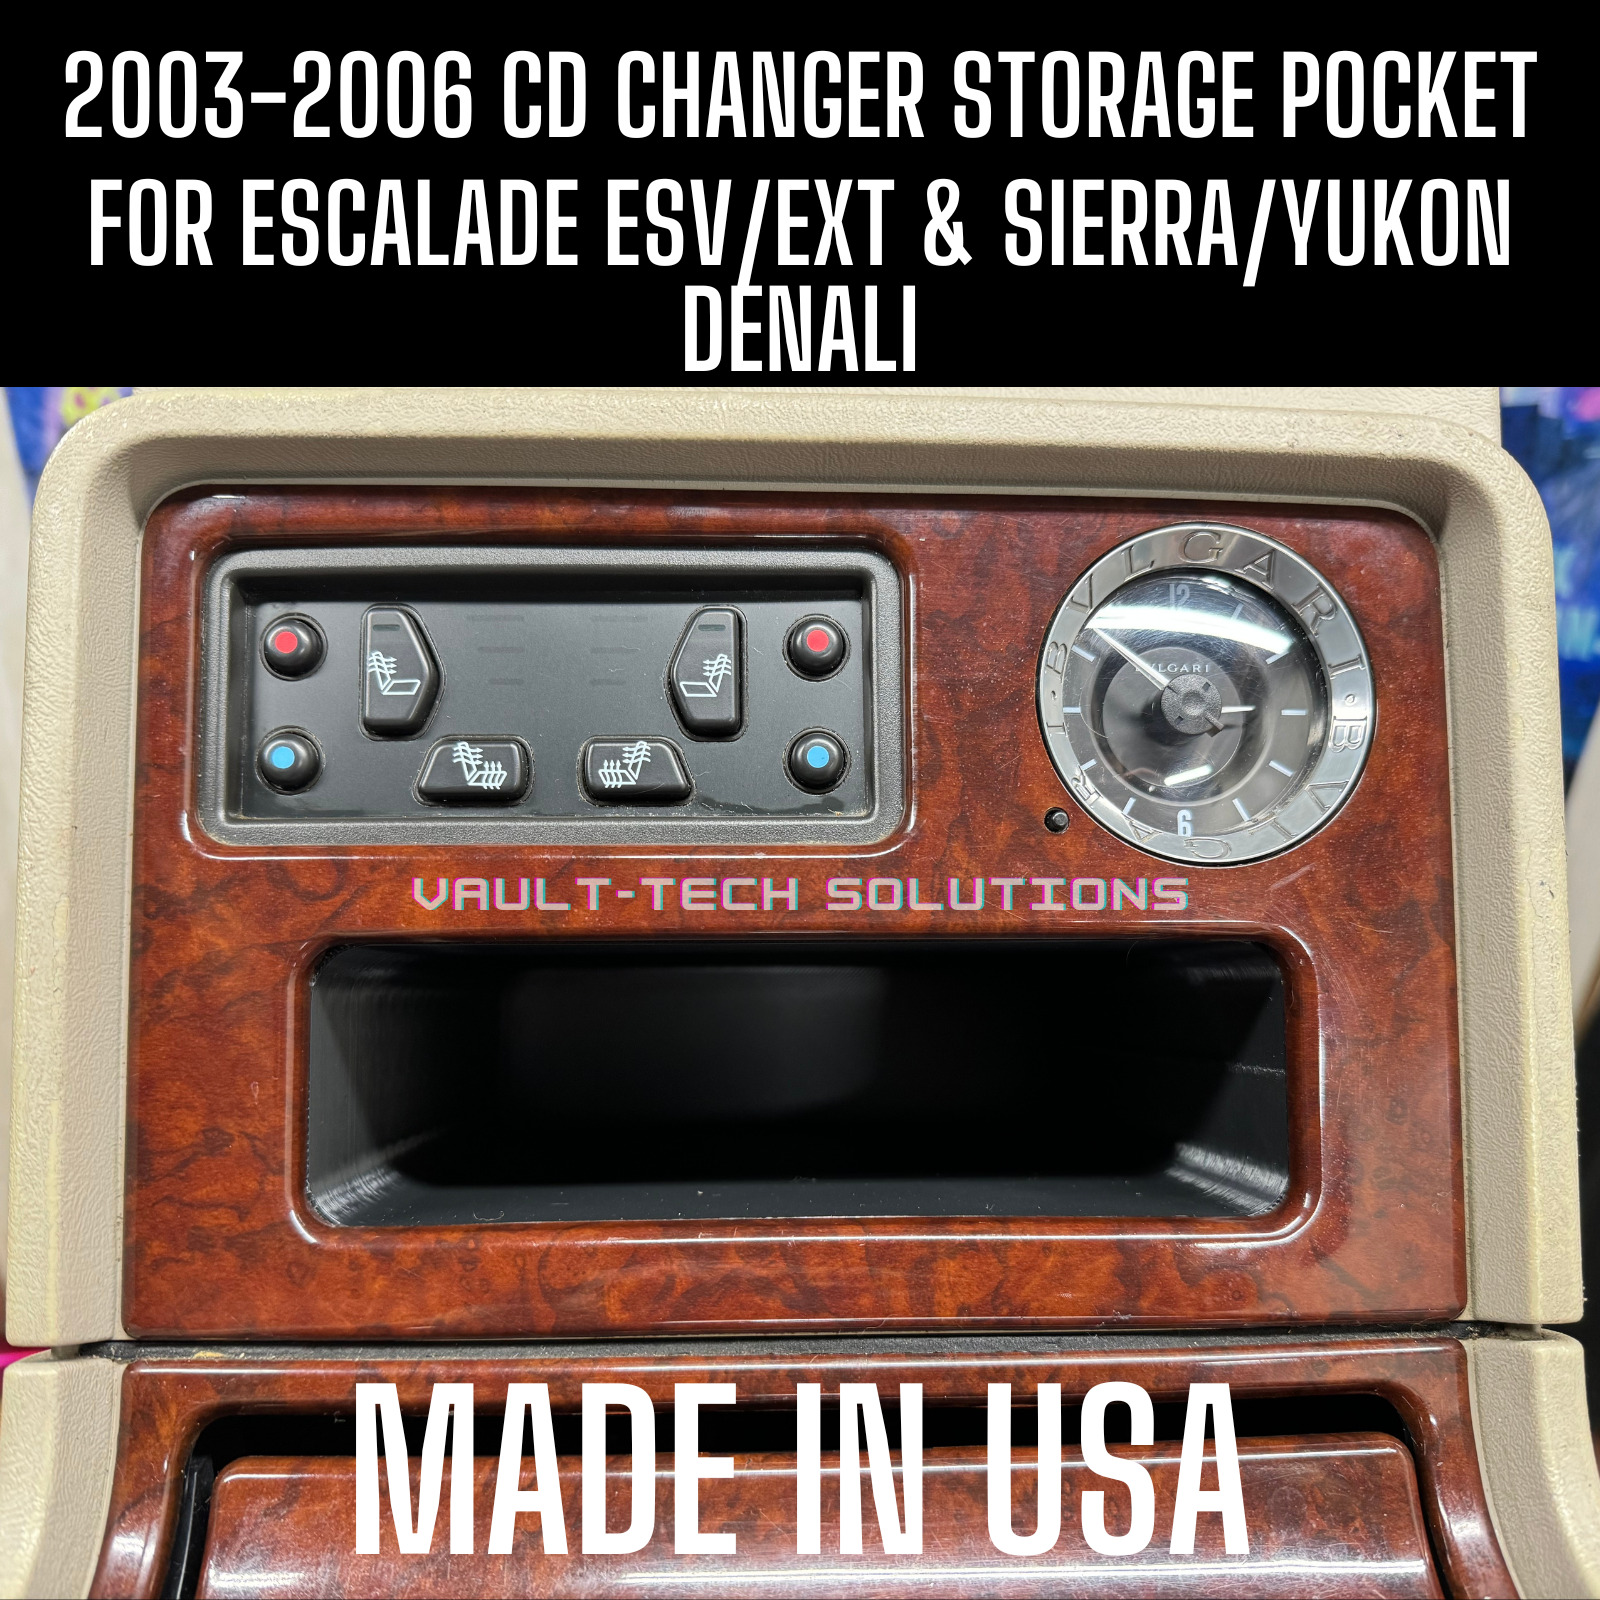 2003-2006 Escalade ESV EXT Sierra Yukon Denali CD Changer Pocket Storage Cubby